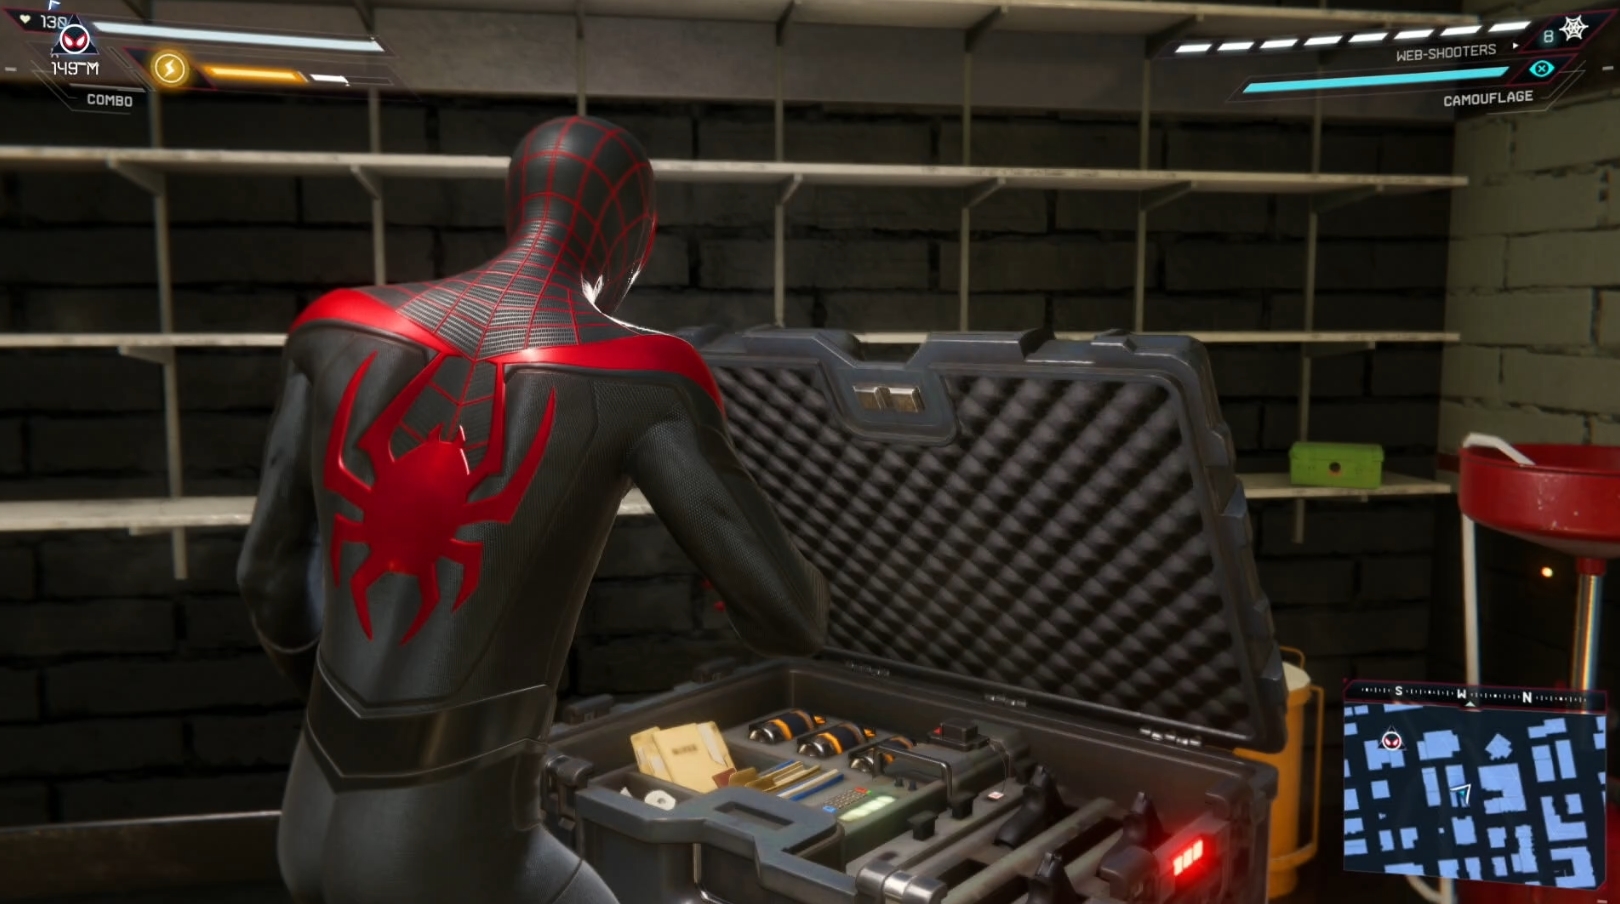 Spider-Man: Miles Morales Missing Underground Caches Fix